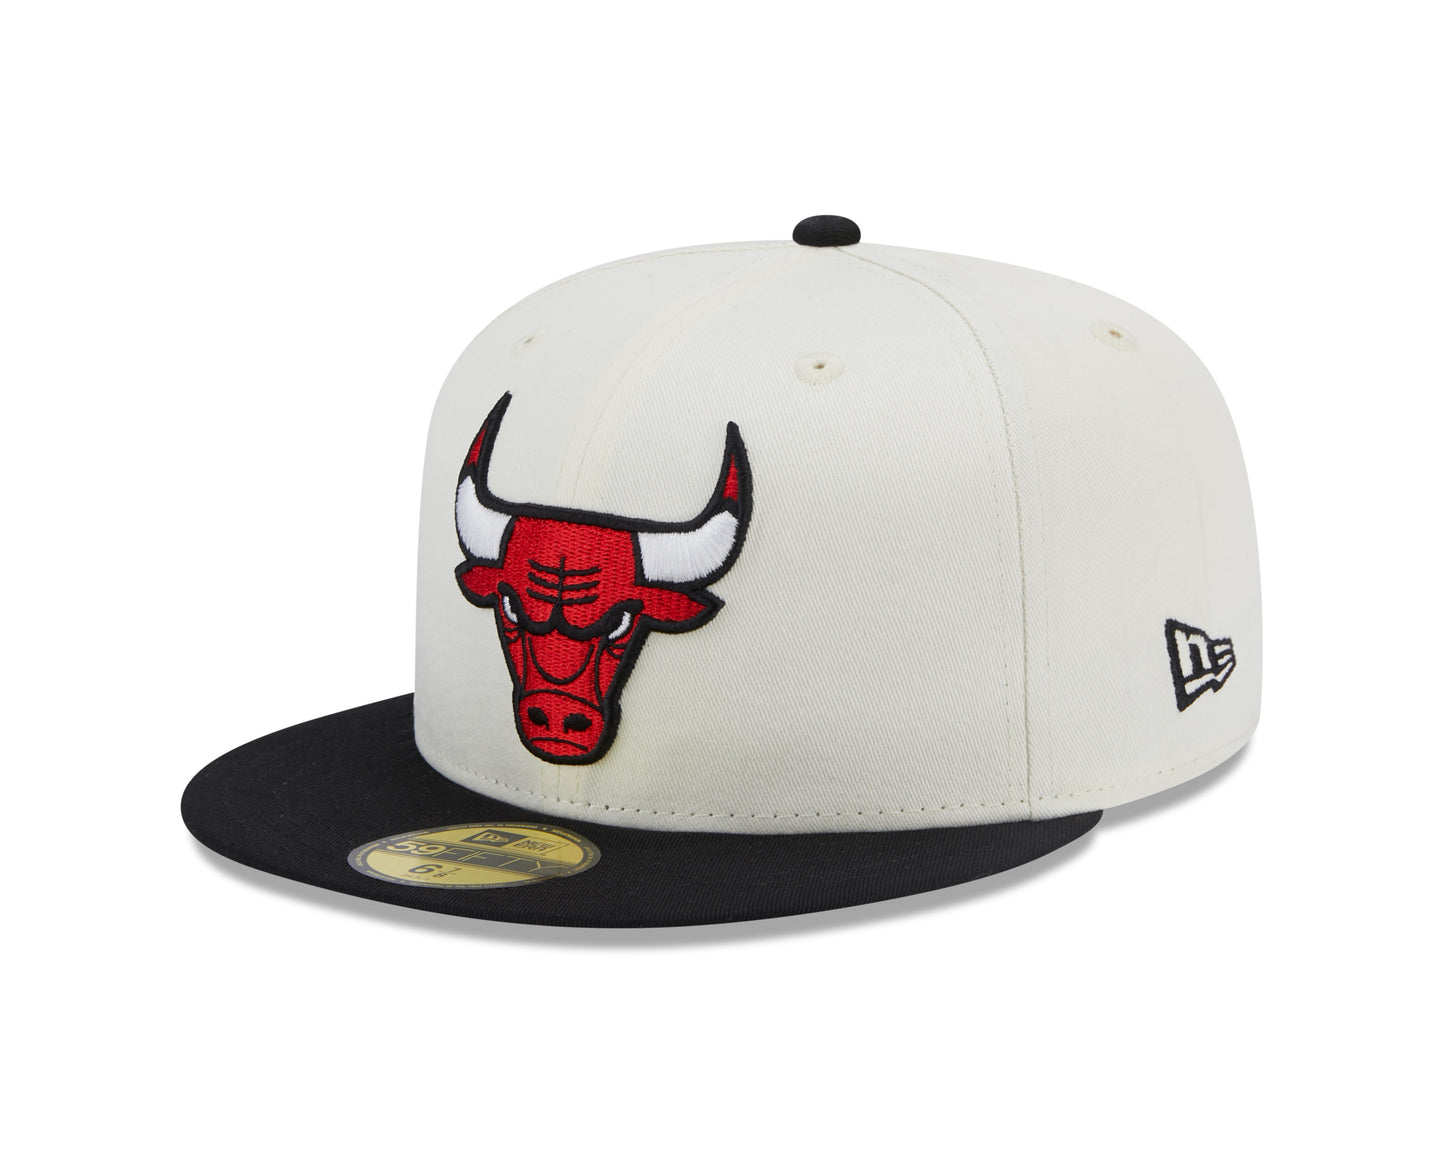 New Era 59Fifty Fitted Cap CHAMPIONSHIPS Chicago Bulls - White/Black - Headz Up 